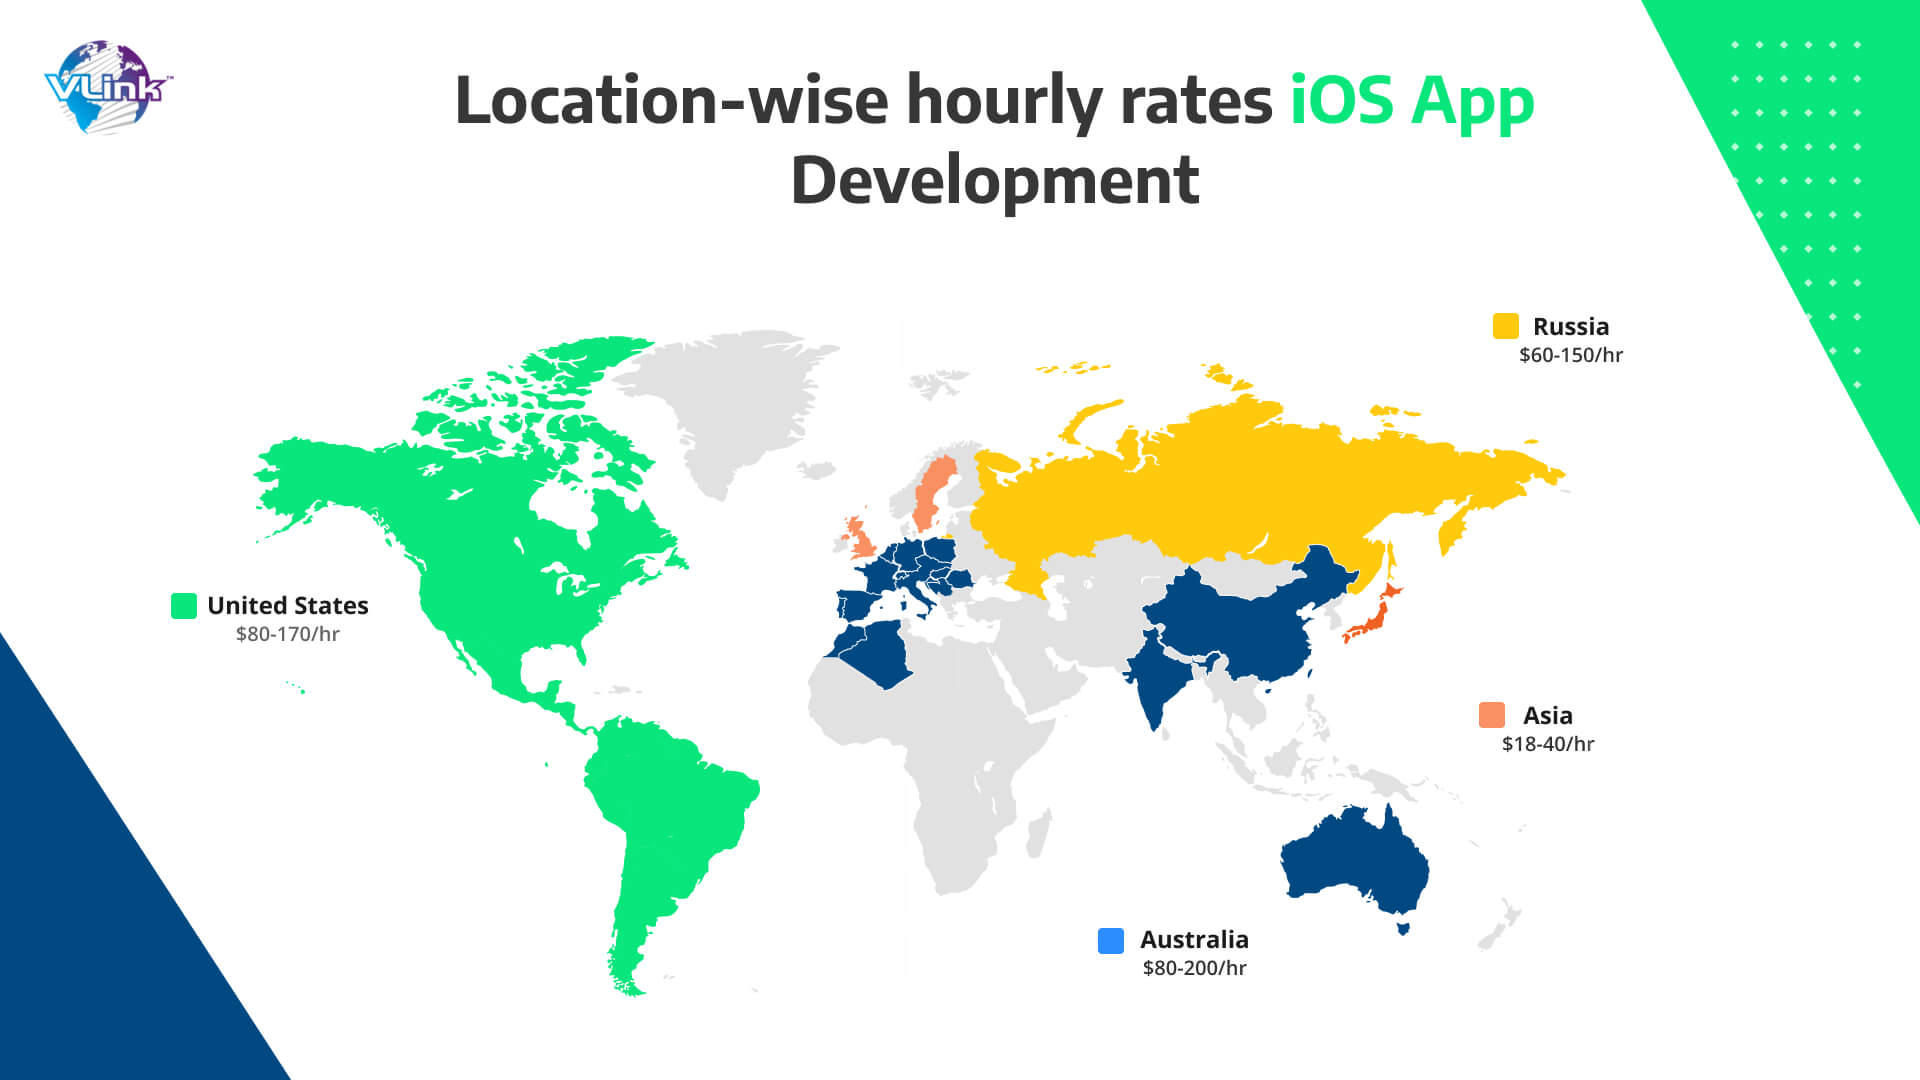 Cost Breakdown of iOS app development based on development team location